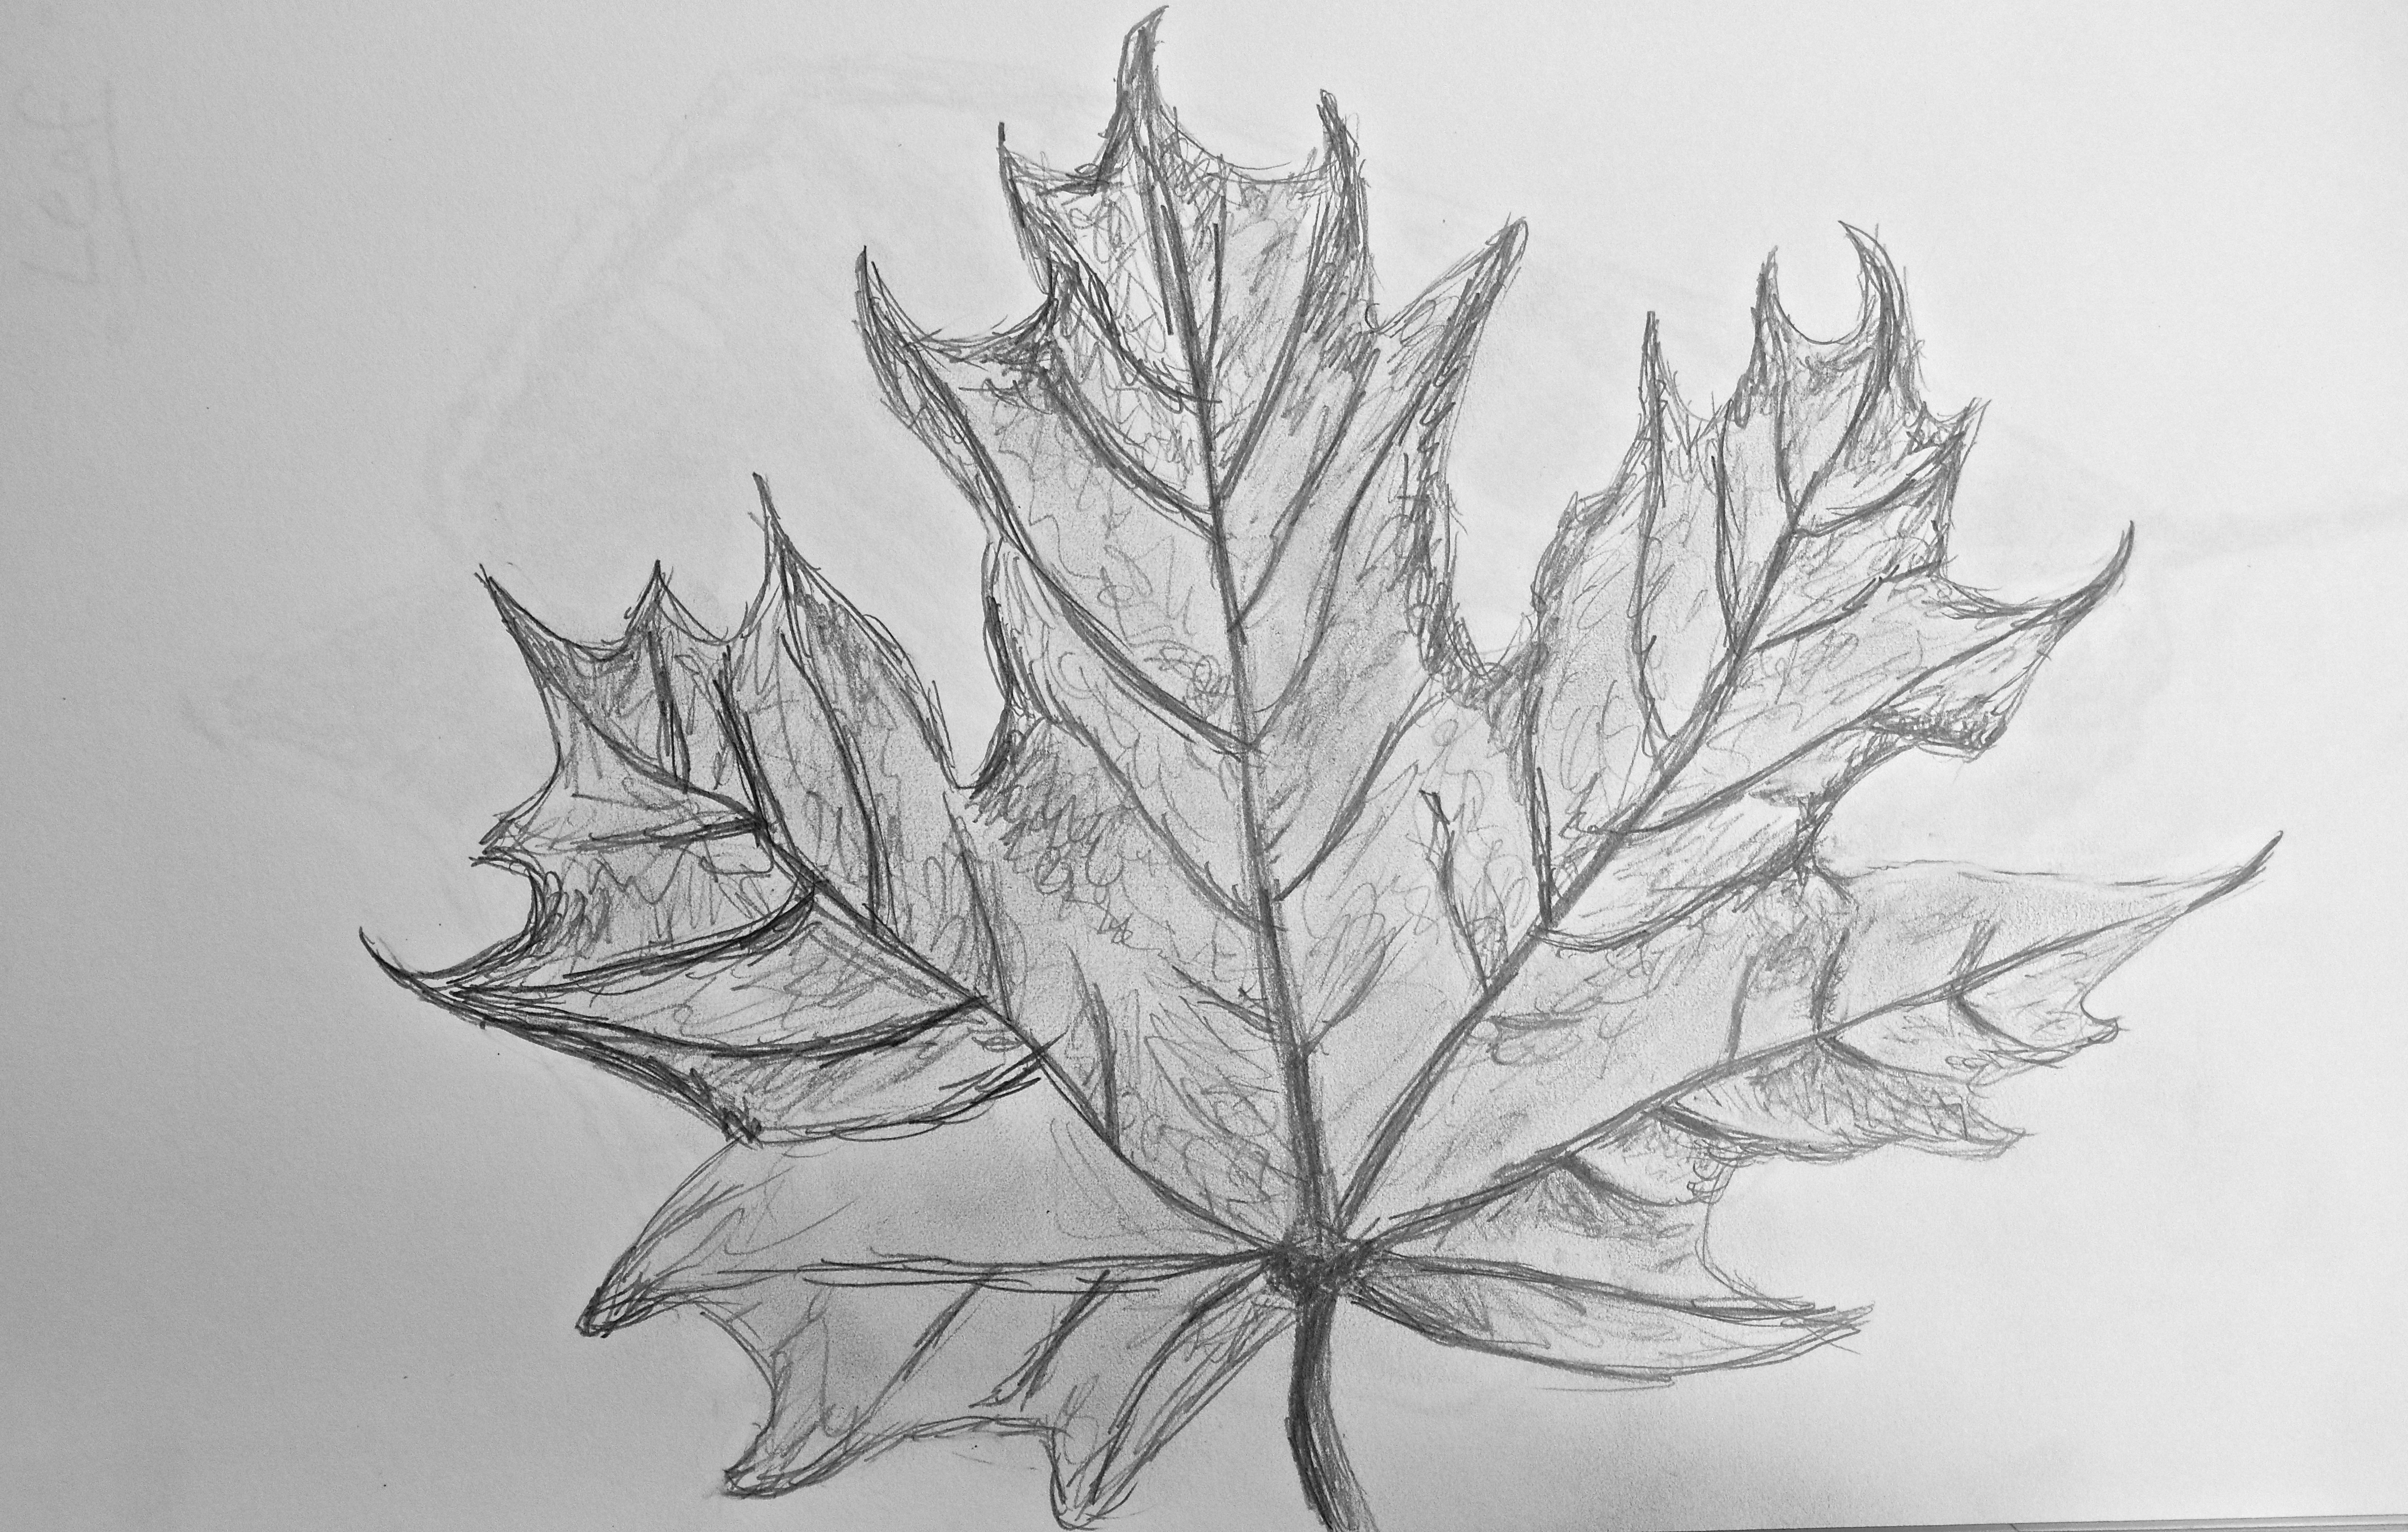 Картинка лист карандашом. Листья карандашом. Кленовый лист рисунок карандашом. Лист клена карандашом. Рисование на листьях клена.